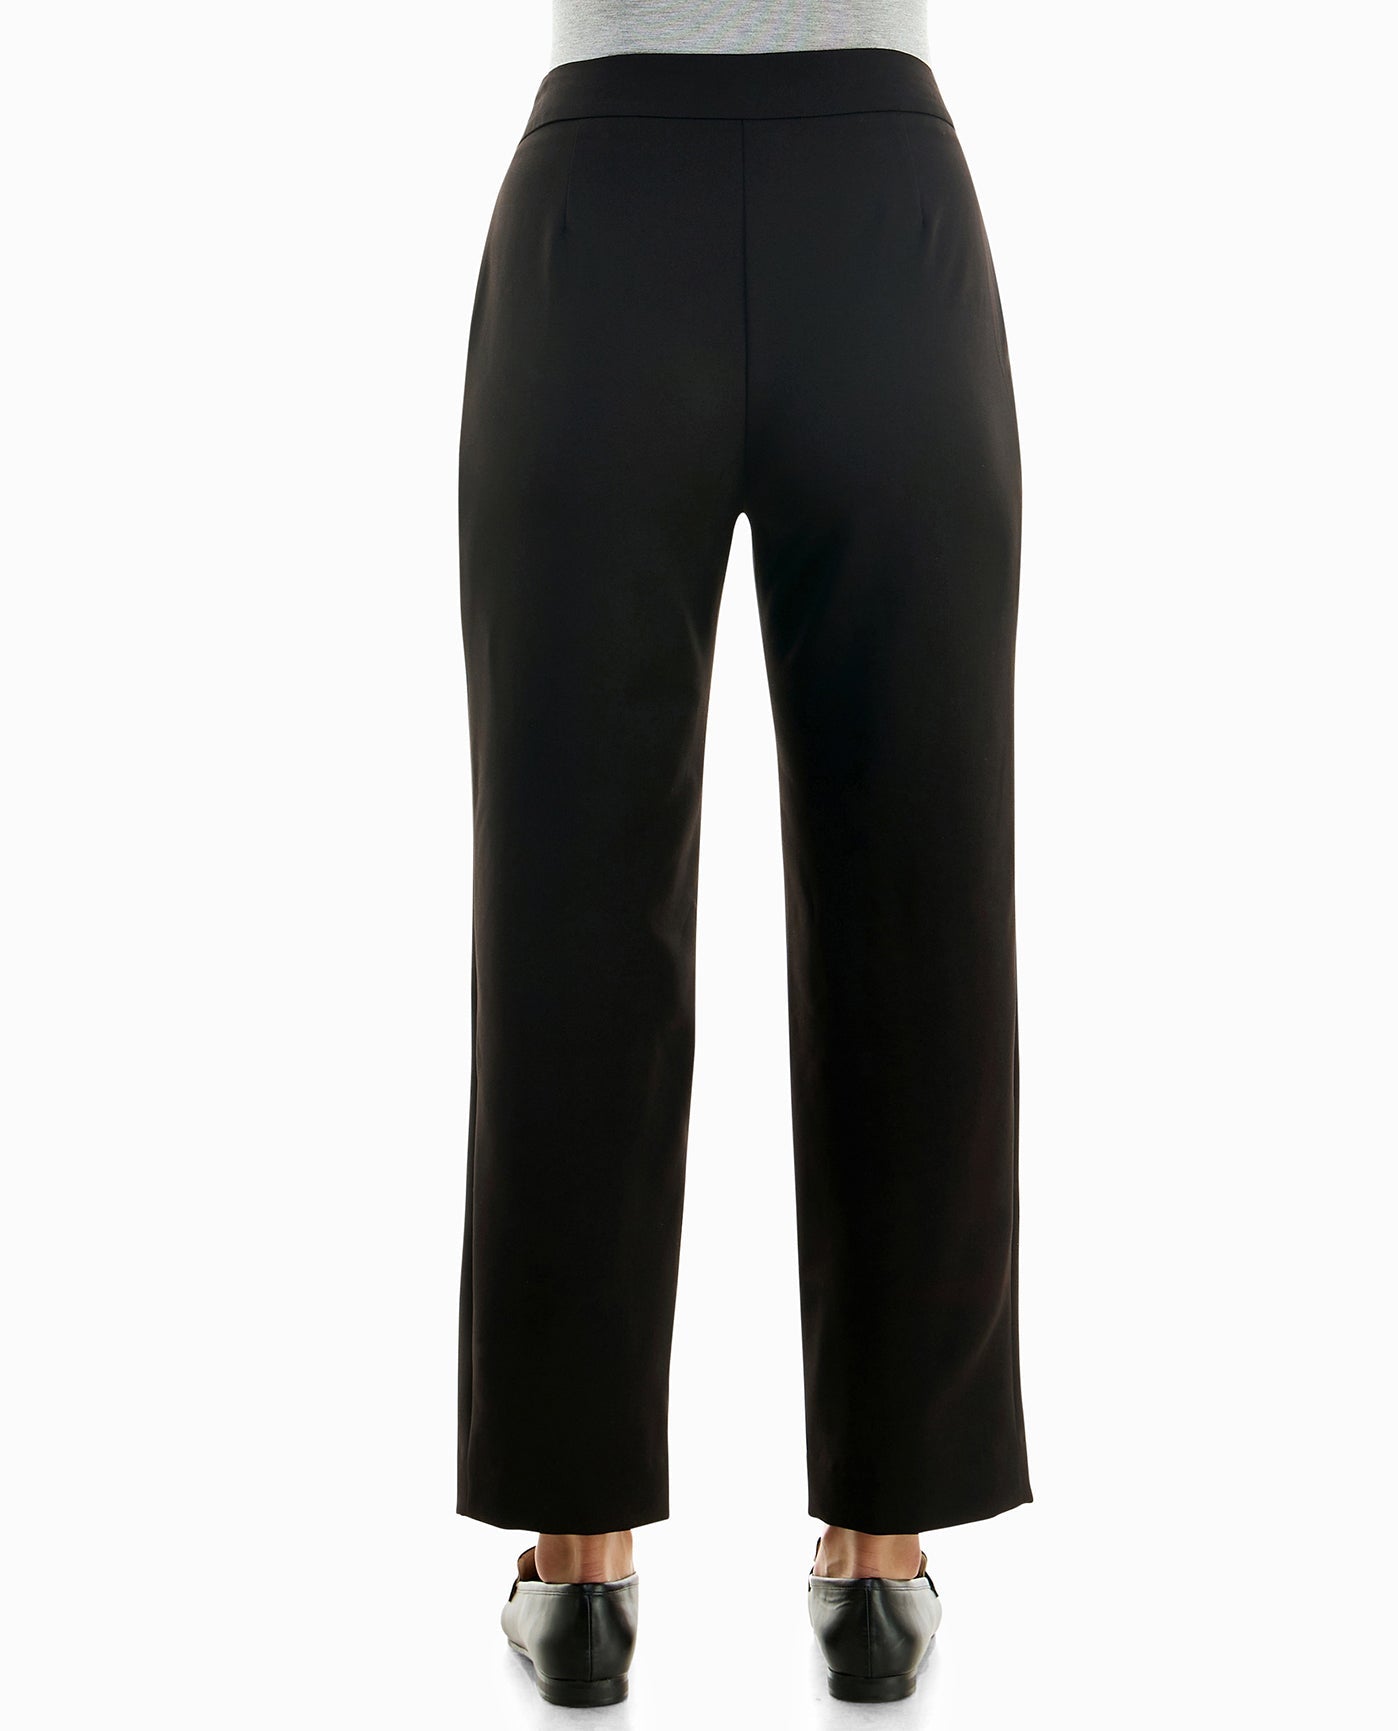 MILLERS - Womens Jeans - Black Cropped - Denim - Cotton Blend Pants -  Fashion - All Season - Basic - Casual Trousers - Work Clothes - Office wear  - Black | M.catch.com.au